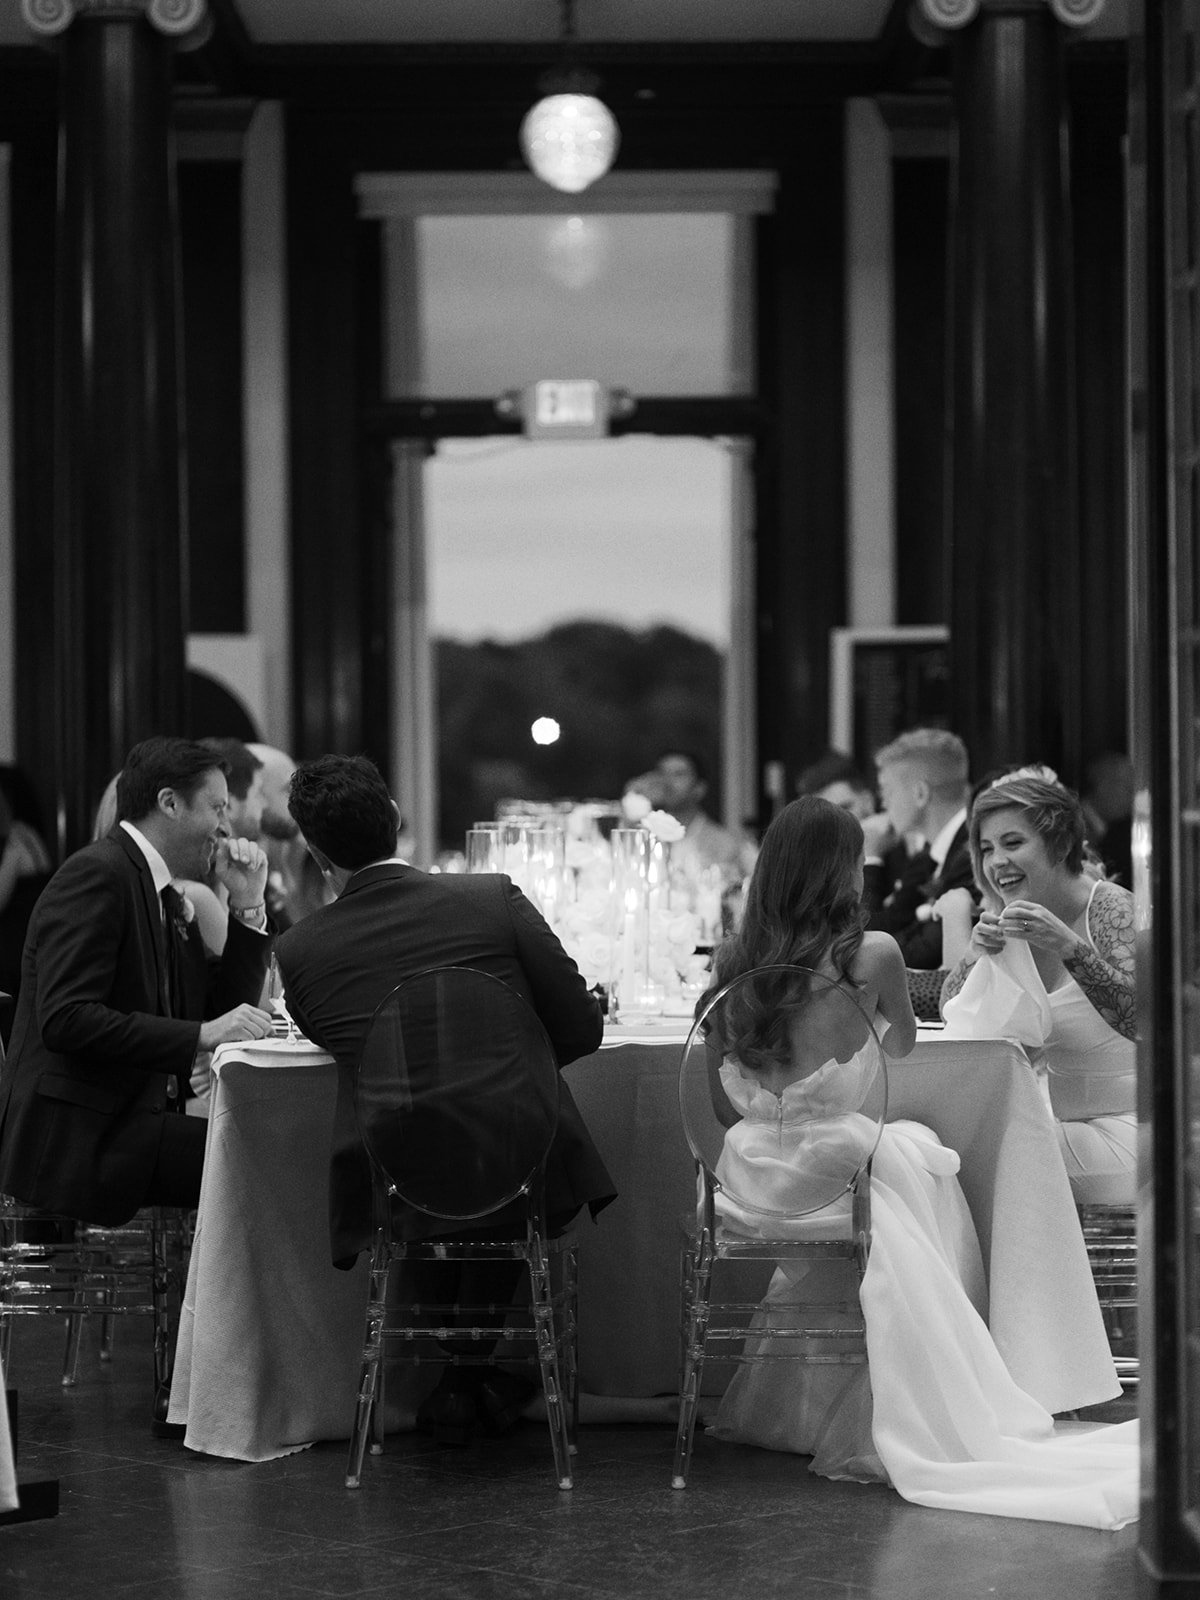 Best-Austin-Wedding-Photographers-Elopement-Film-35mm-Asheville-Santa-Barbara-1066.jpg